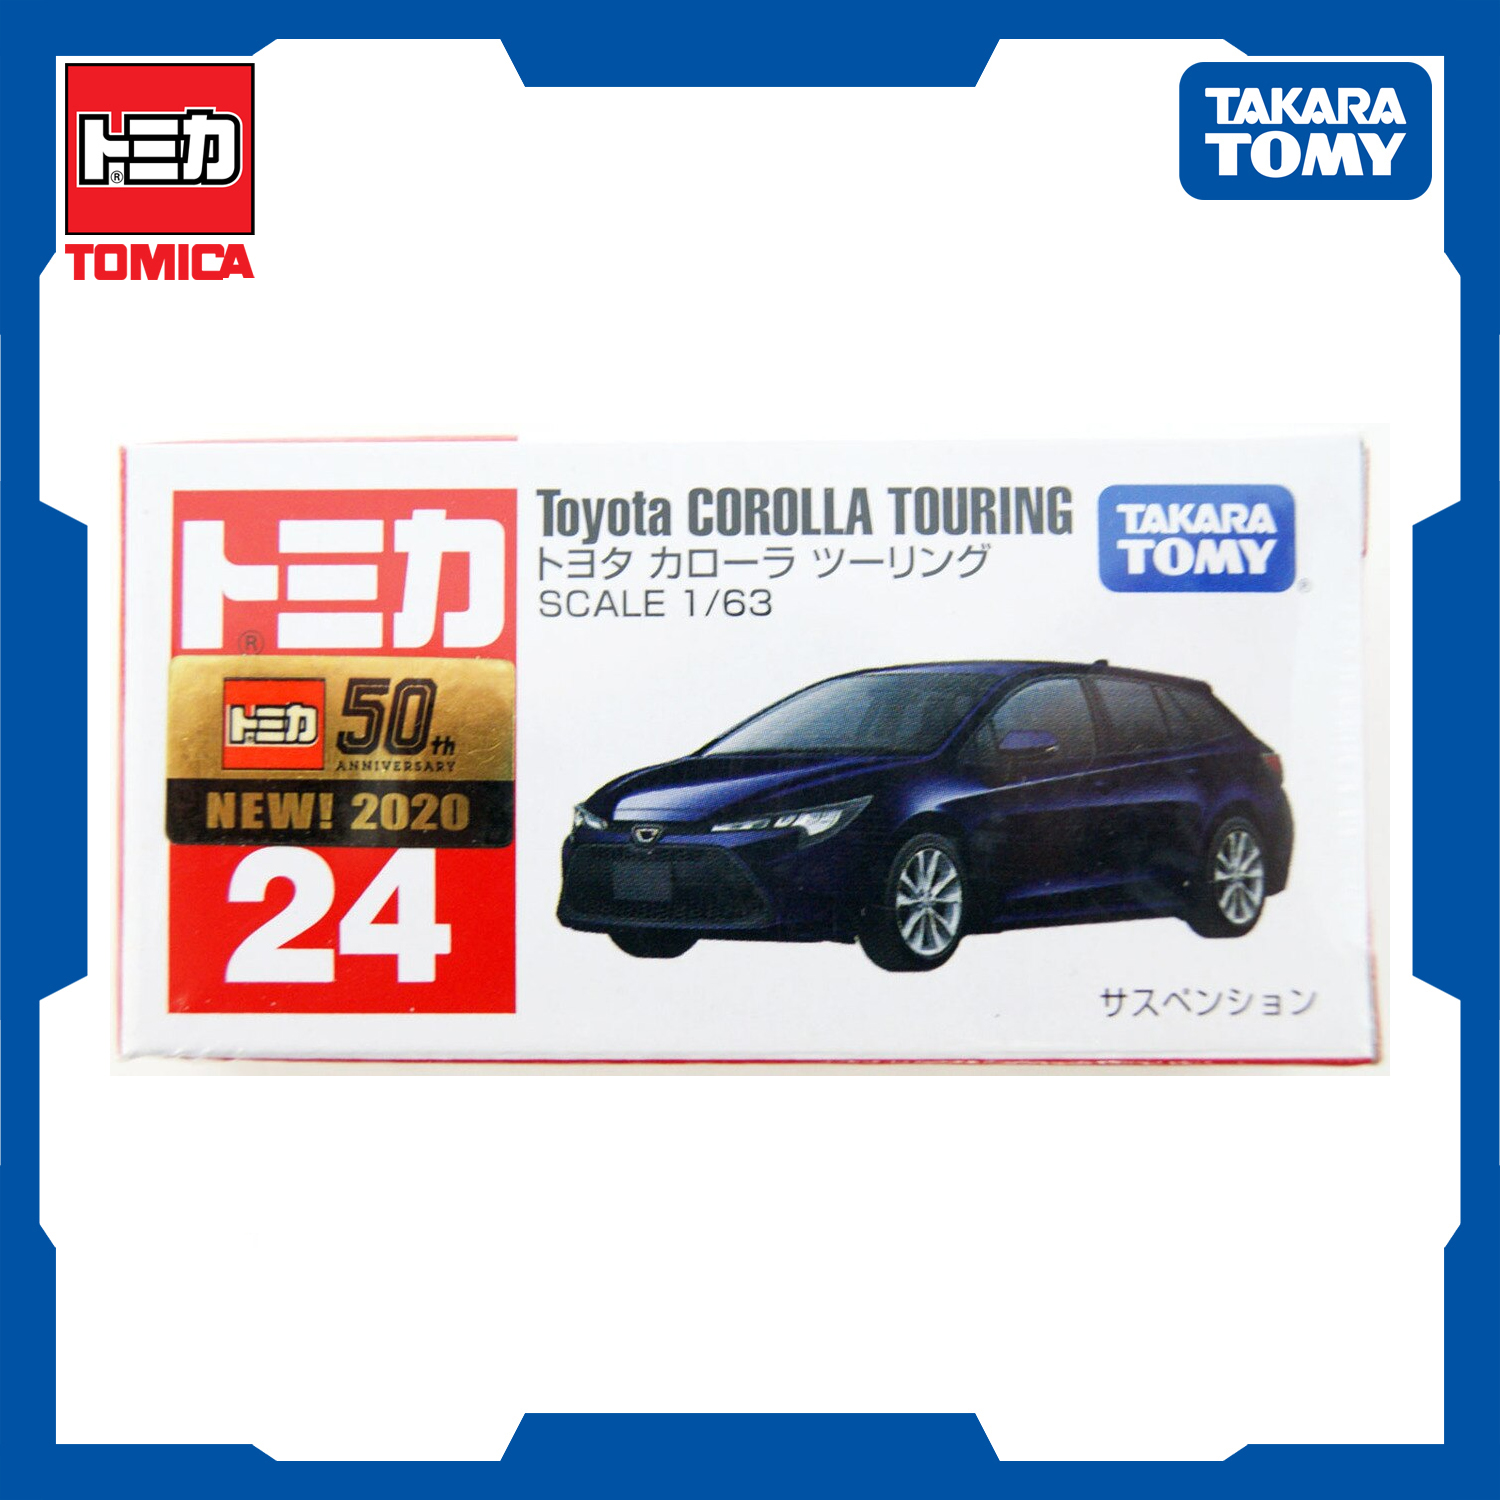 Tomica Toyota Corolla Touring No. 24